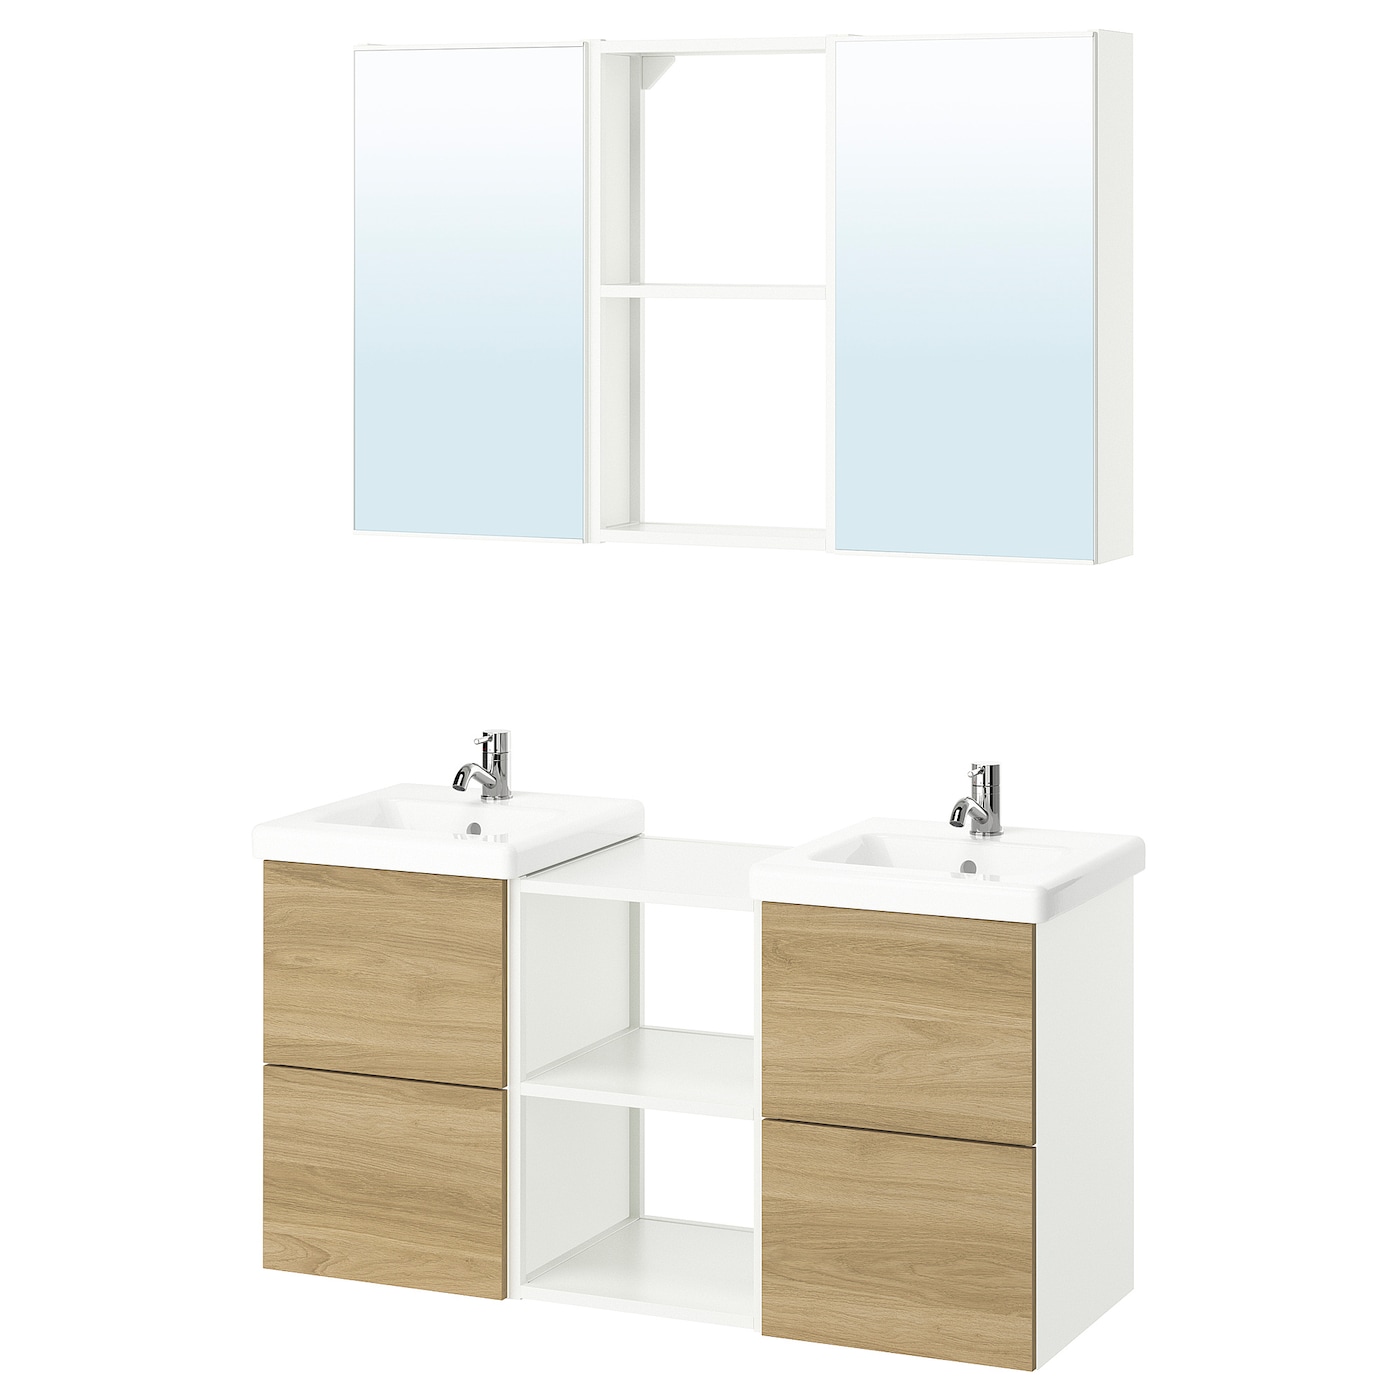 Комбинация для ванной - IKEA ENHET, 124х43х65 см, белый/имитация дуба, ЭНХЕТ ИКЕА